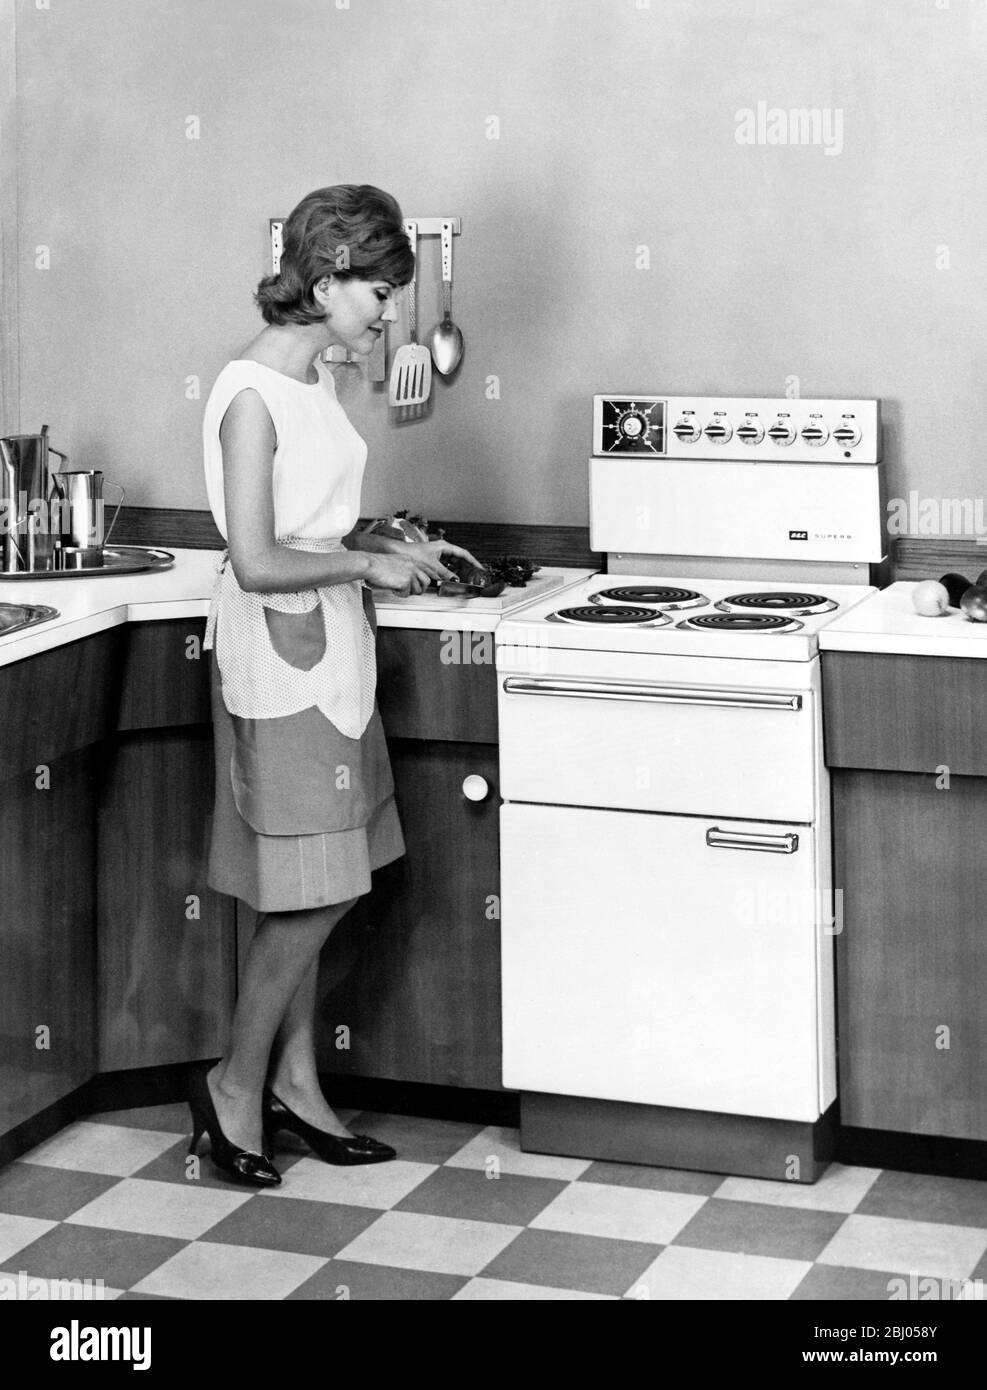 1950s Kitchen - Stock Photo